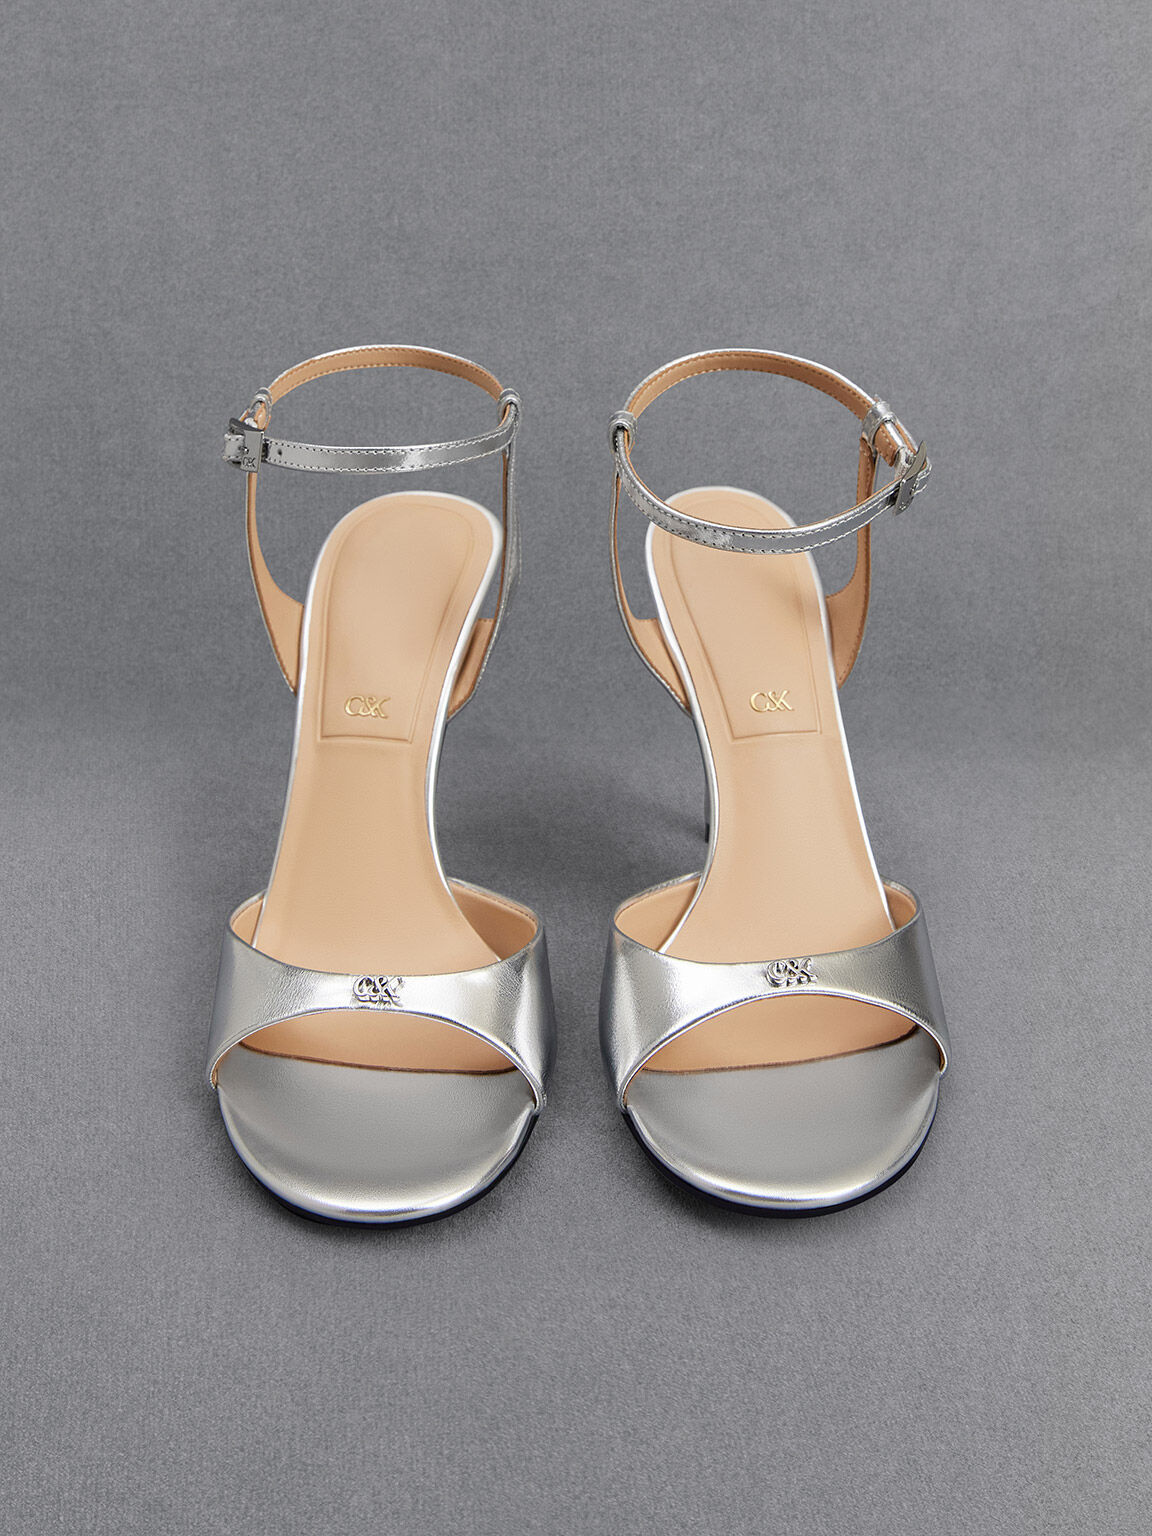 The Limited Women's TADA Peep Toe Slingback Heels Size 6.5M Snake Gray  Metallic | eBay